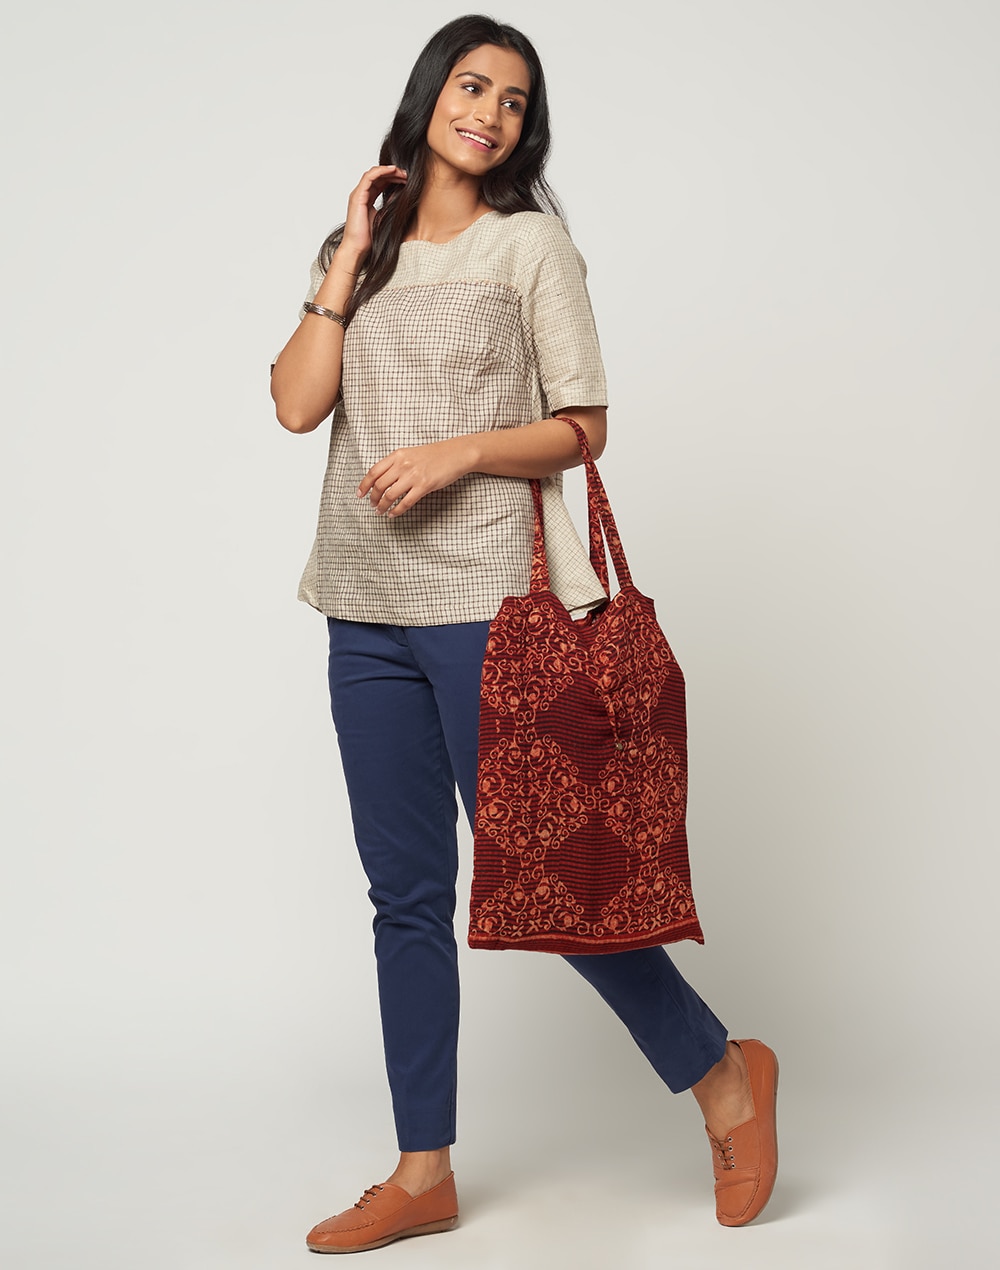 Red Cotton Jhola Bag (Unisex, Size 15″) – Chris Crafts